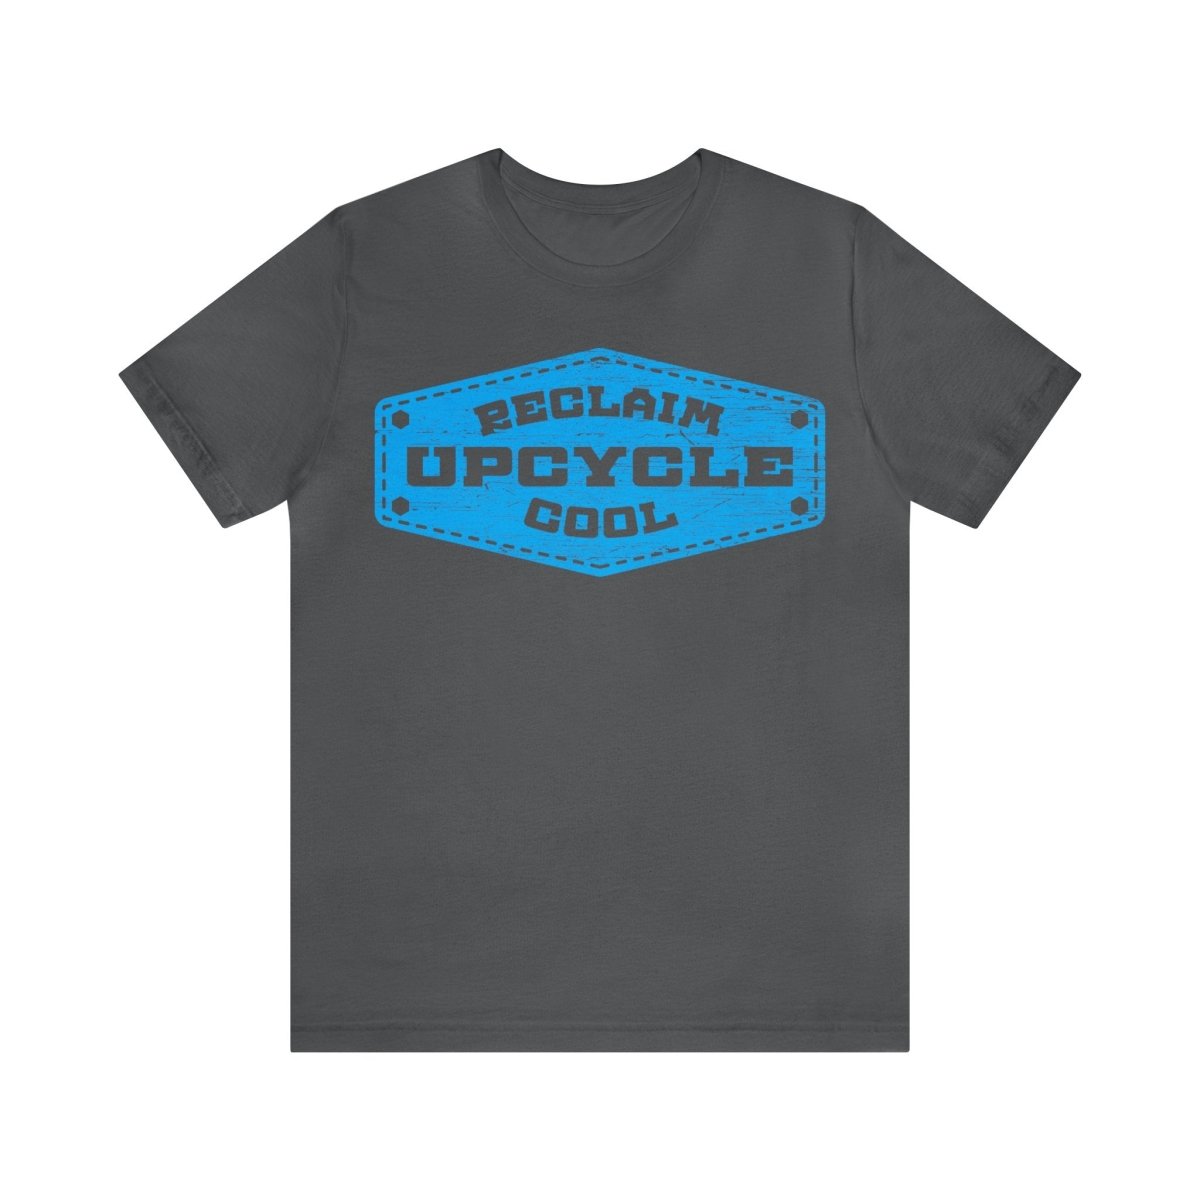 Reclaim Cool - Upcycle Premium T-Shirt, ReUse, Remake, Redo, DIY, Recycle, Repurpose, Self Reliance, Fix It, Junkin' Genius